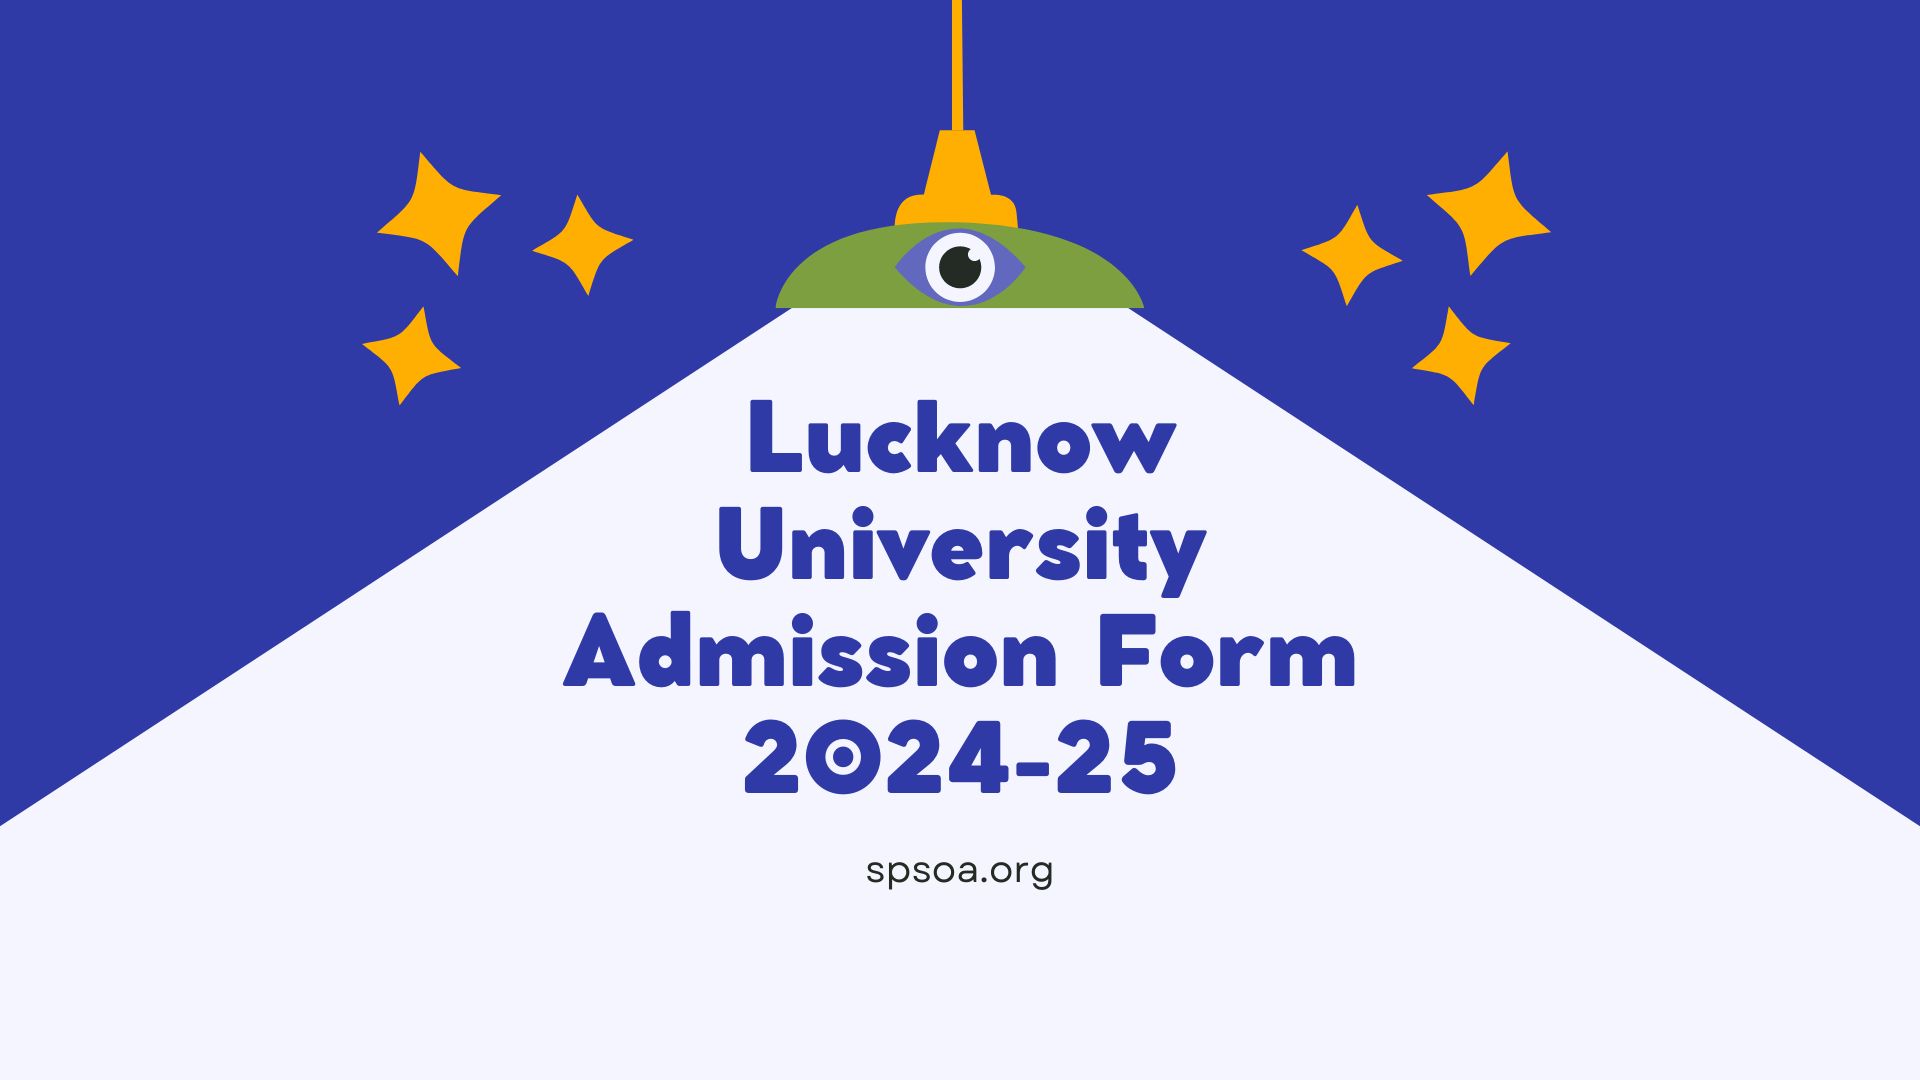 Lucknow University Admission Form 2024-25